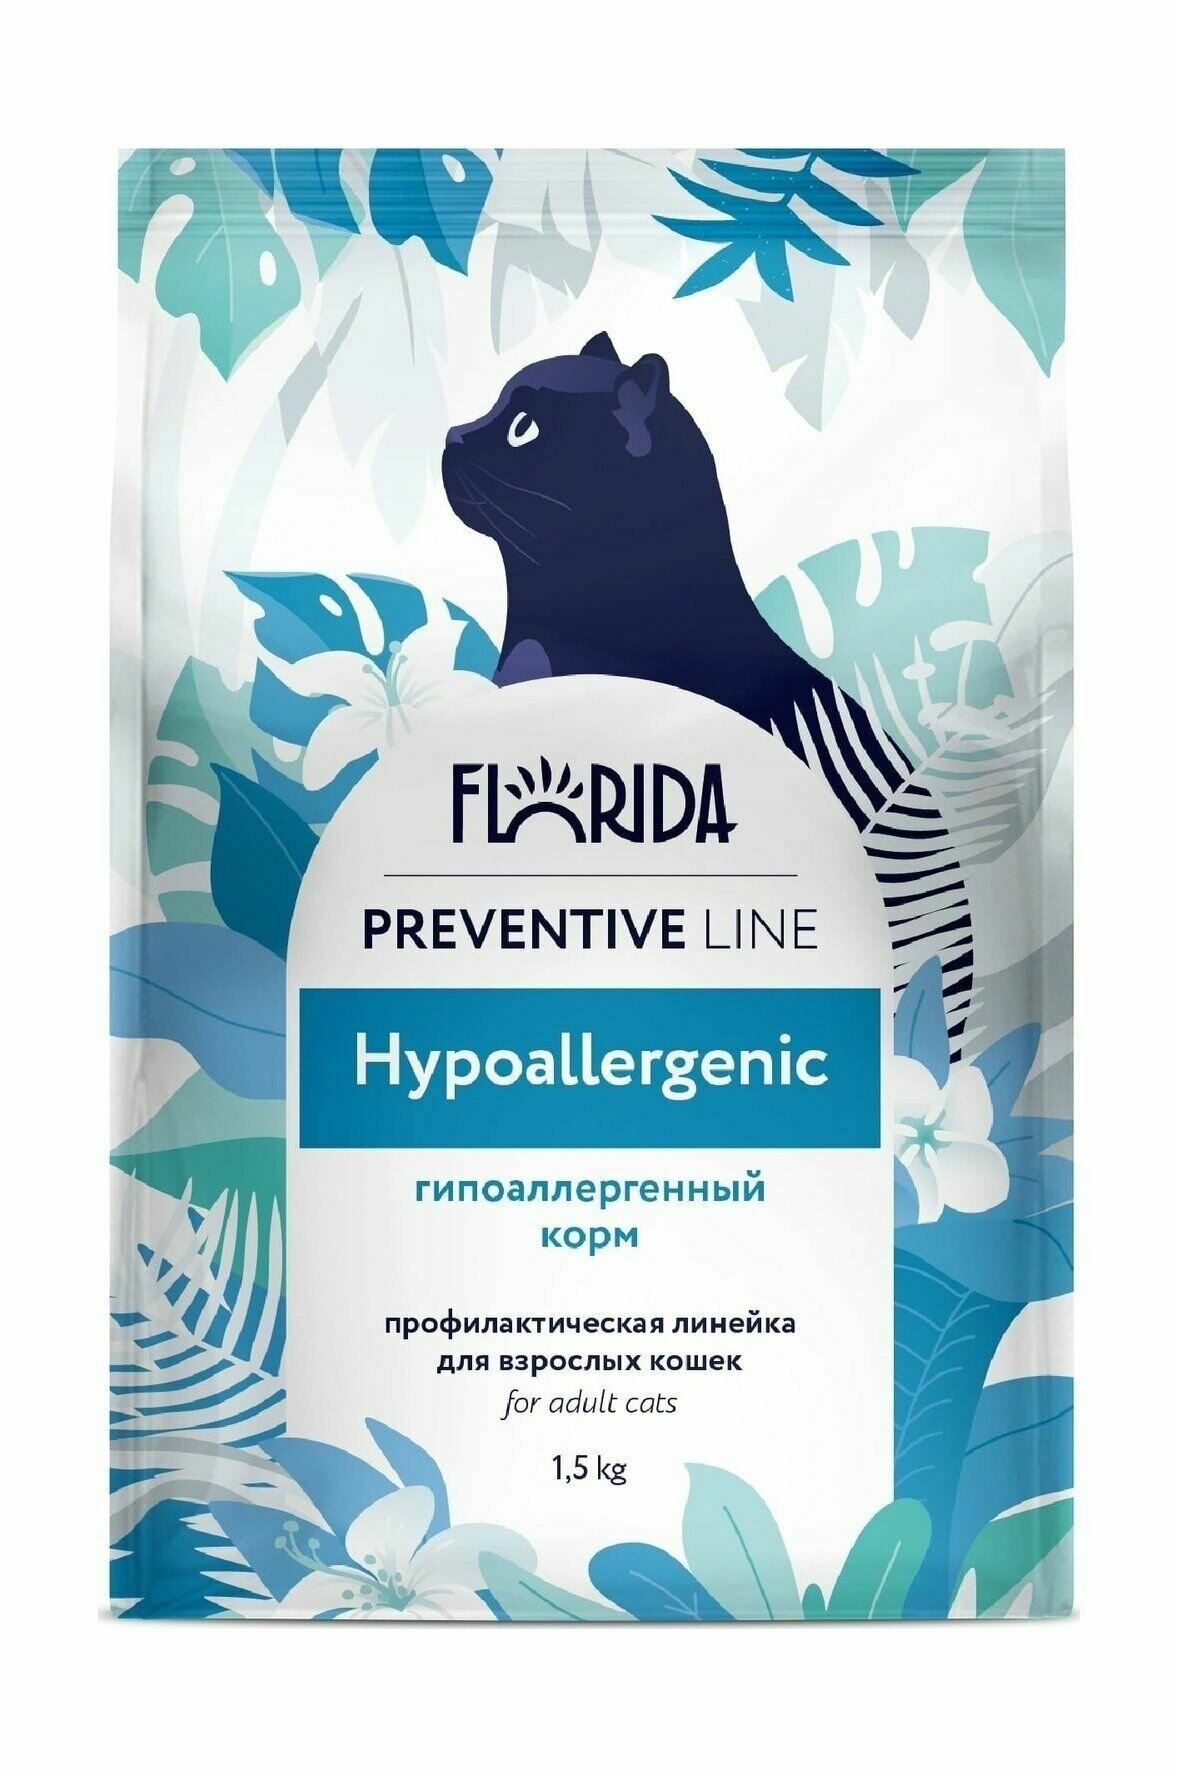 Florida Preventive Line Hypoallergenic - Гипоаллергенный сухой корм для кошек (1,5 кг)